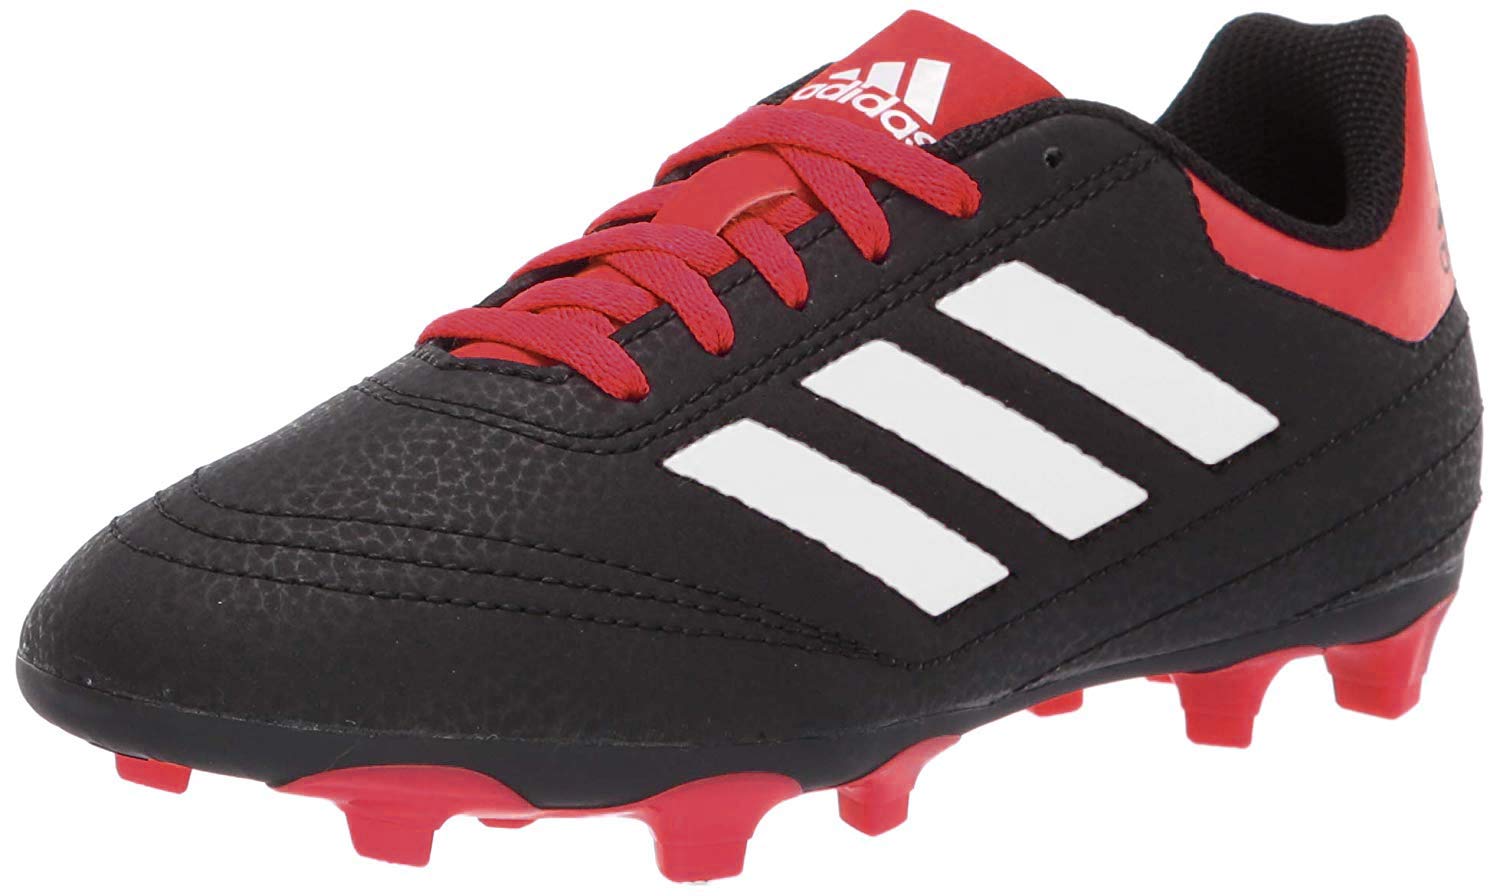 adidas Unisex-Kid's Goletto VI Firm Ground Football Shoe, Black/White/Scarlet, 10.5K M US Little Kid